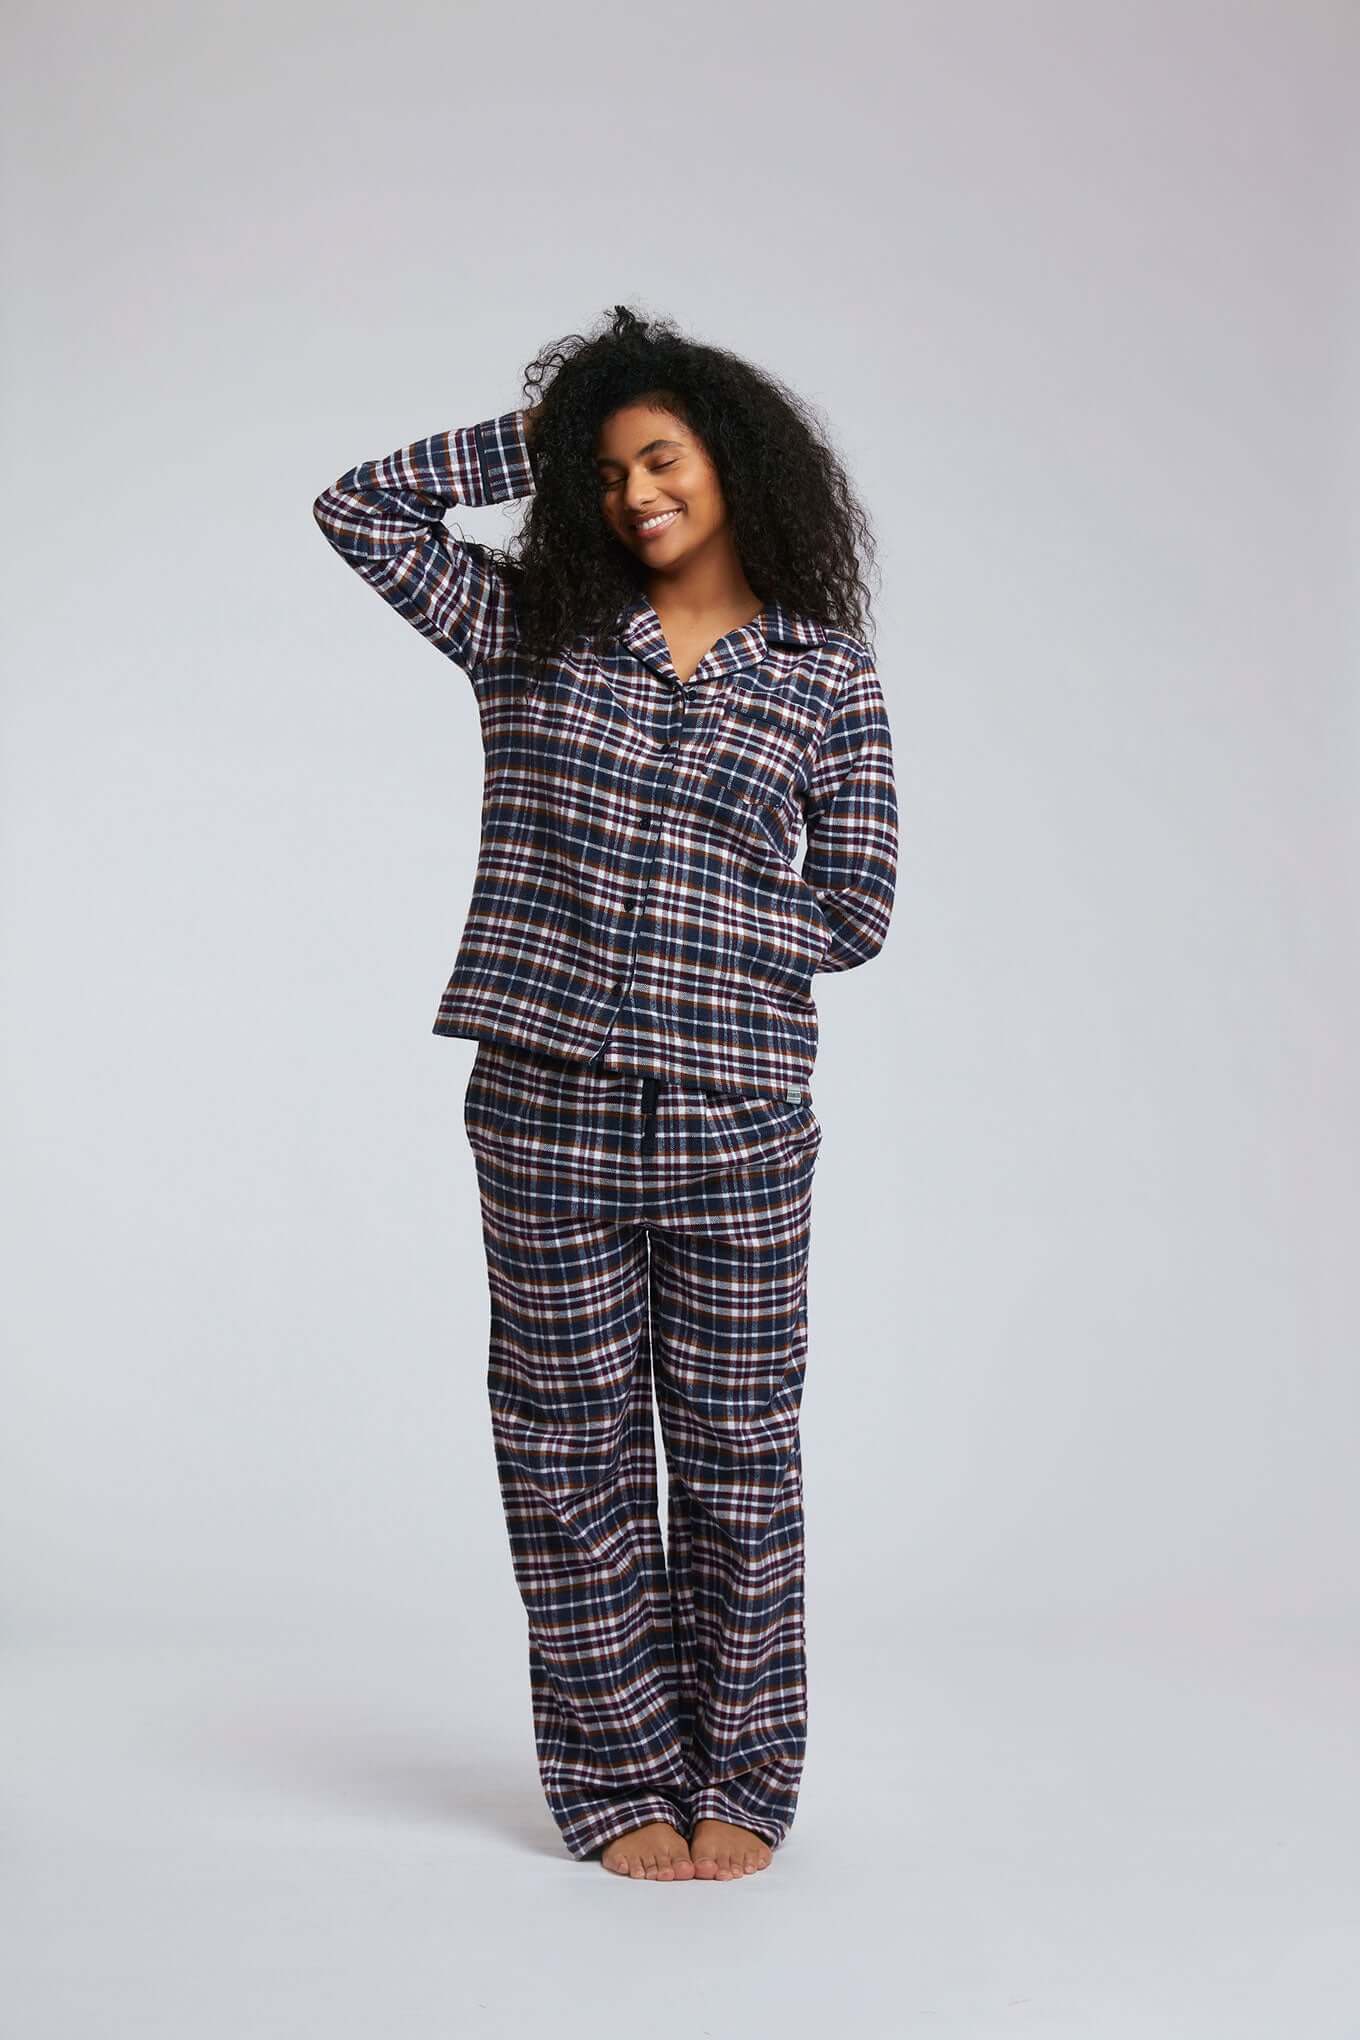 JIM JAM Womens Organic Cotton Pyjama Set Navy, Size 3 / UK 12 / EUR 40